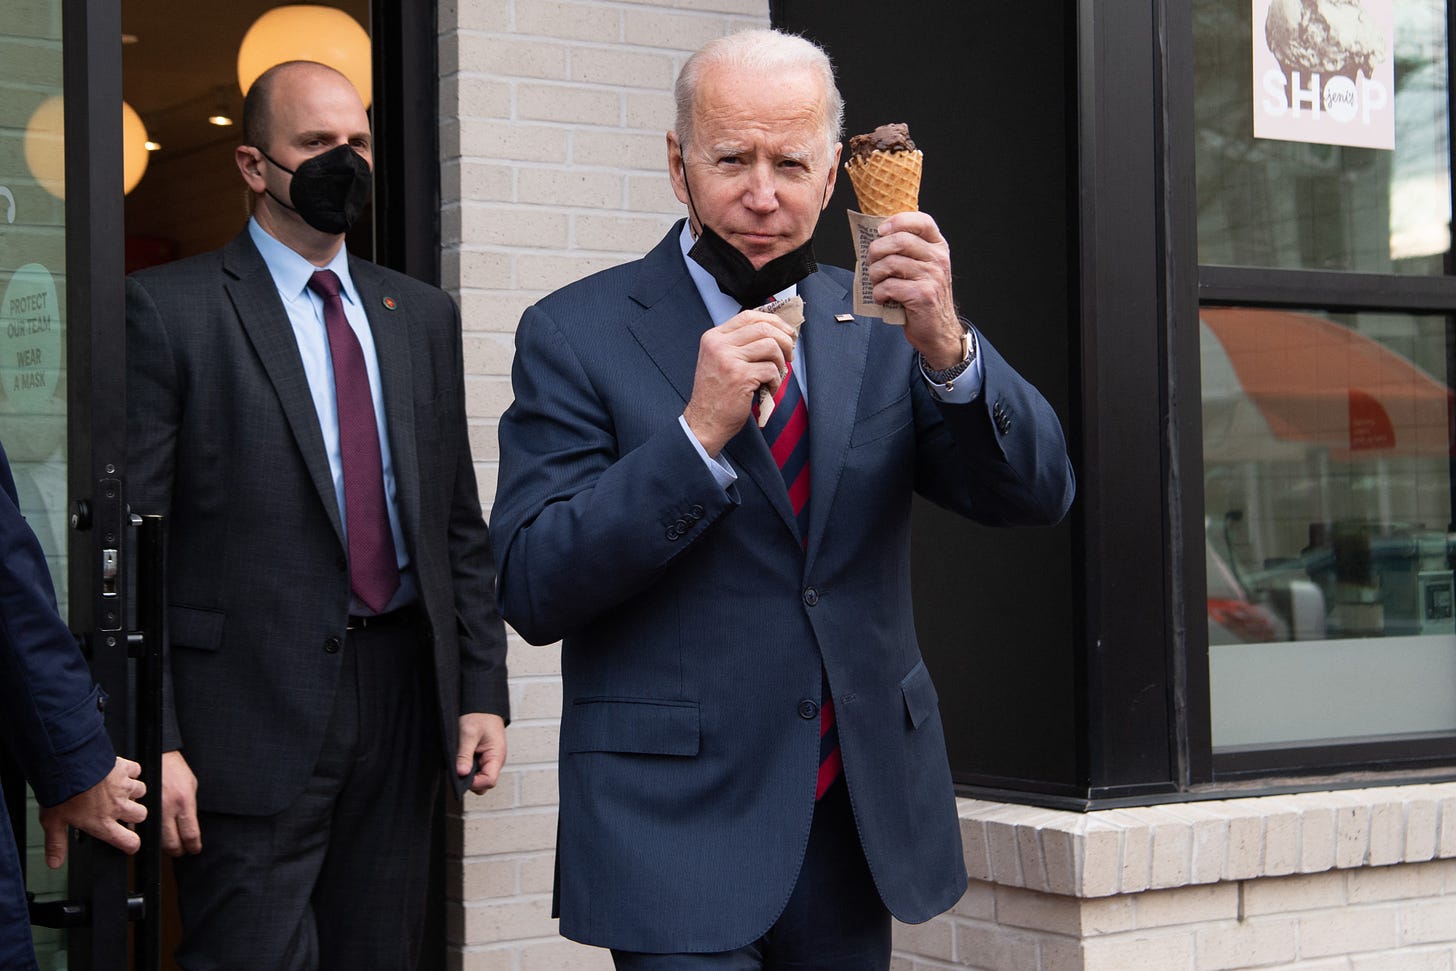 US President Joe Biden carries an ice cream cone as he leaves Jeni's Ice Cream in Washington, DC, on January 25, 2022. (Photo by SAUL LOEB / AFP) (Photo by SAUL LOEB/AFP via Getty Images)